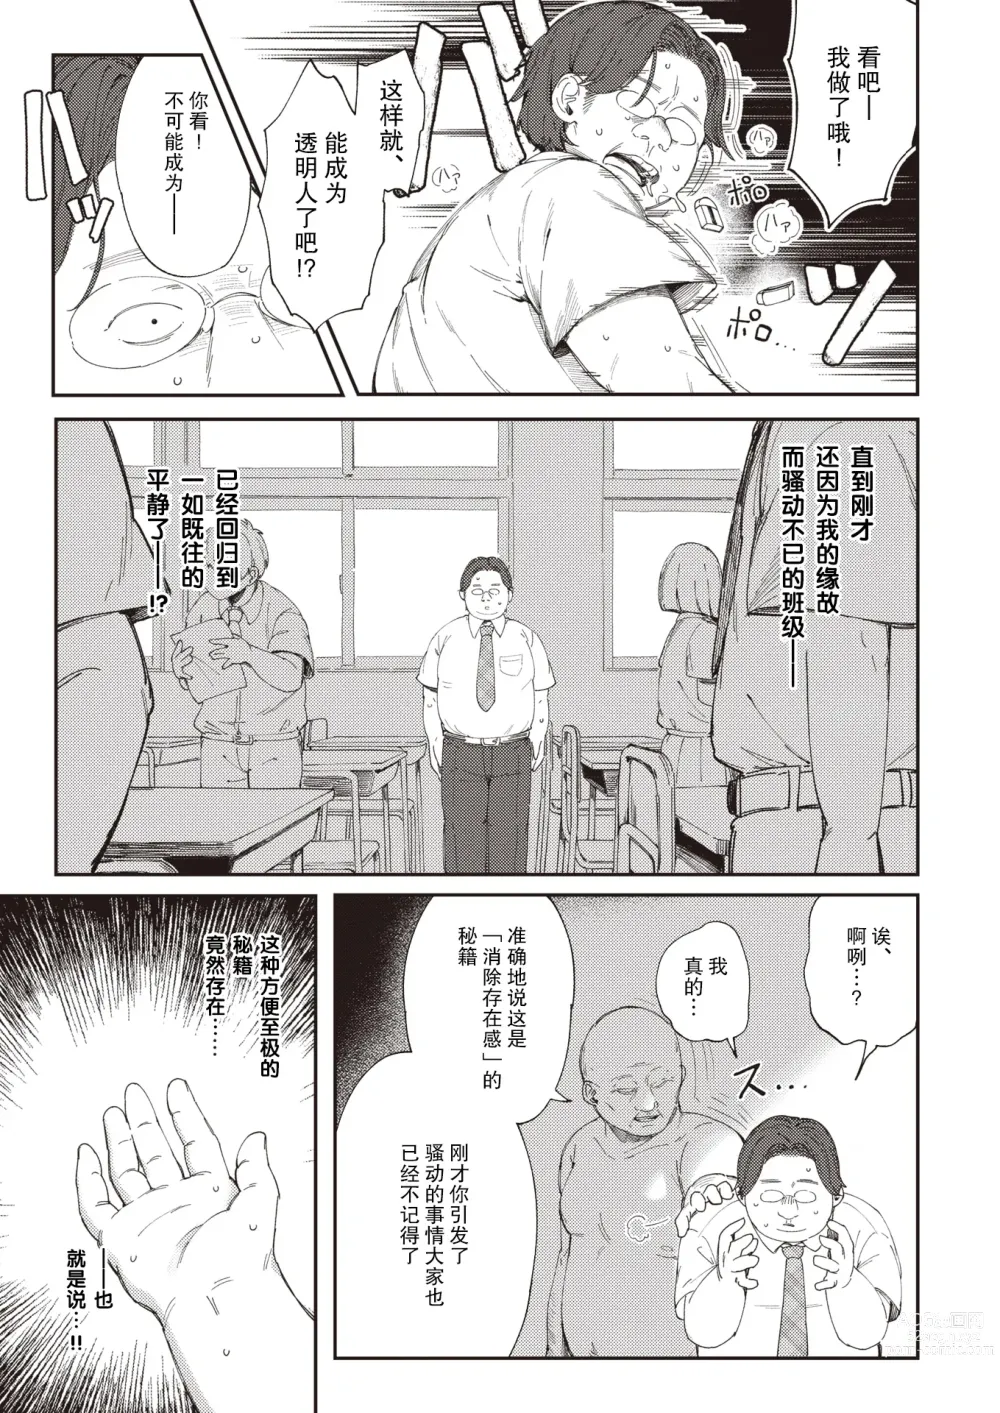 Page 8 of manga ERO ACTION REPLAY!!